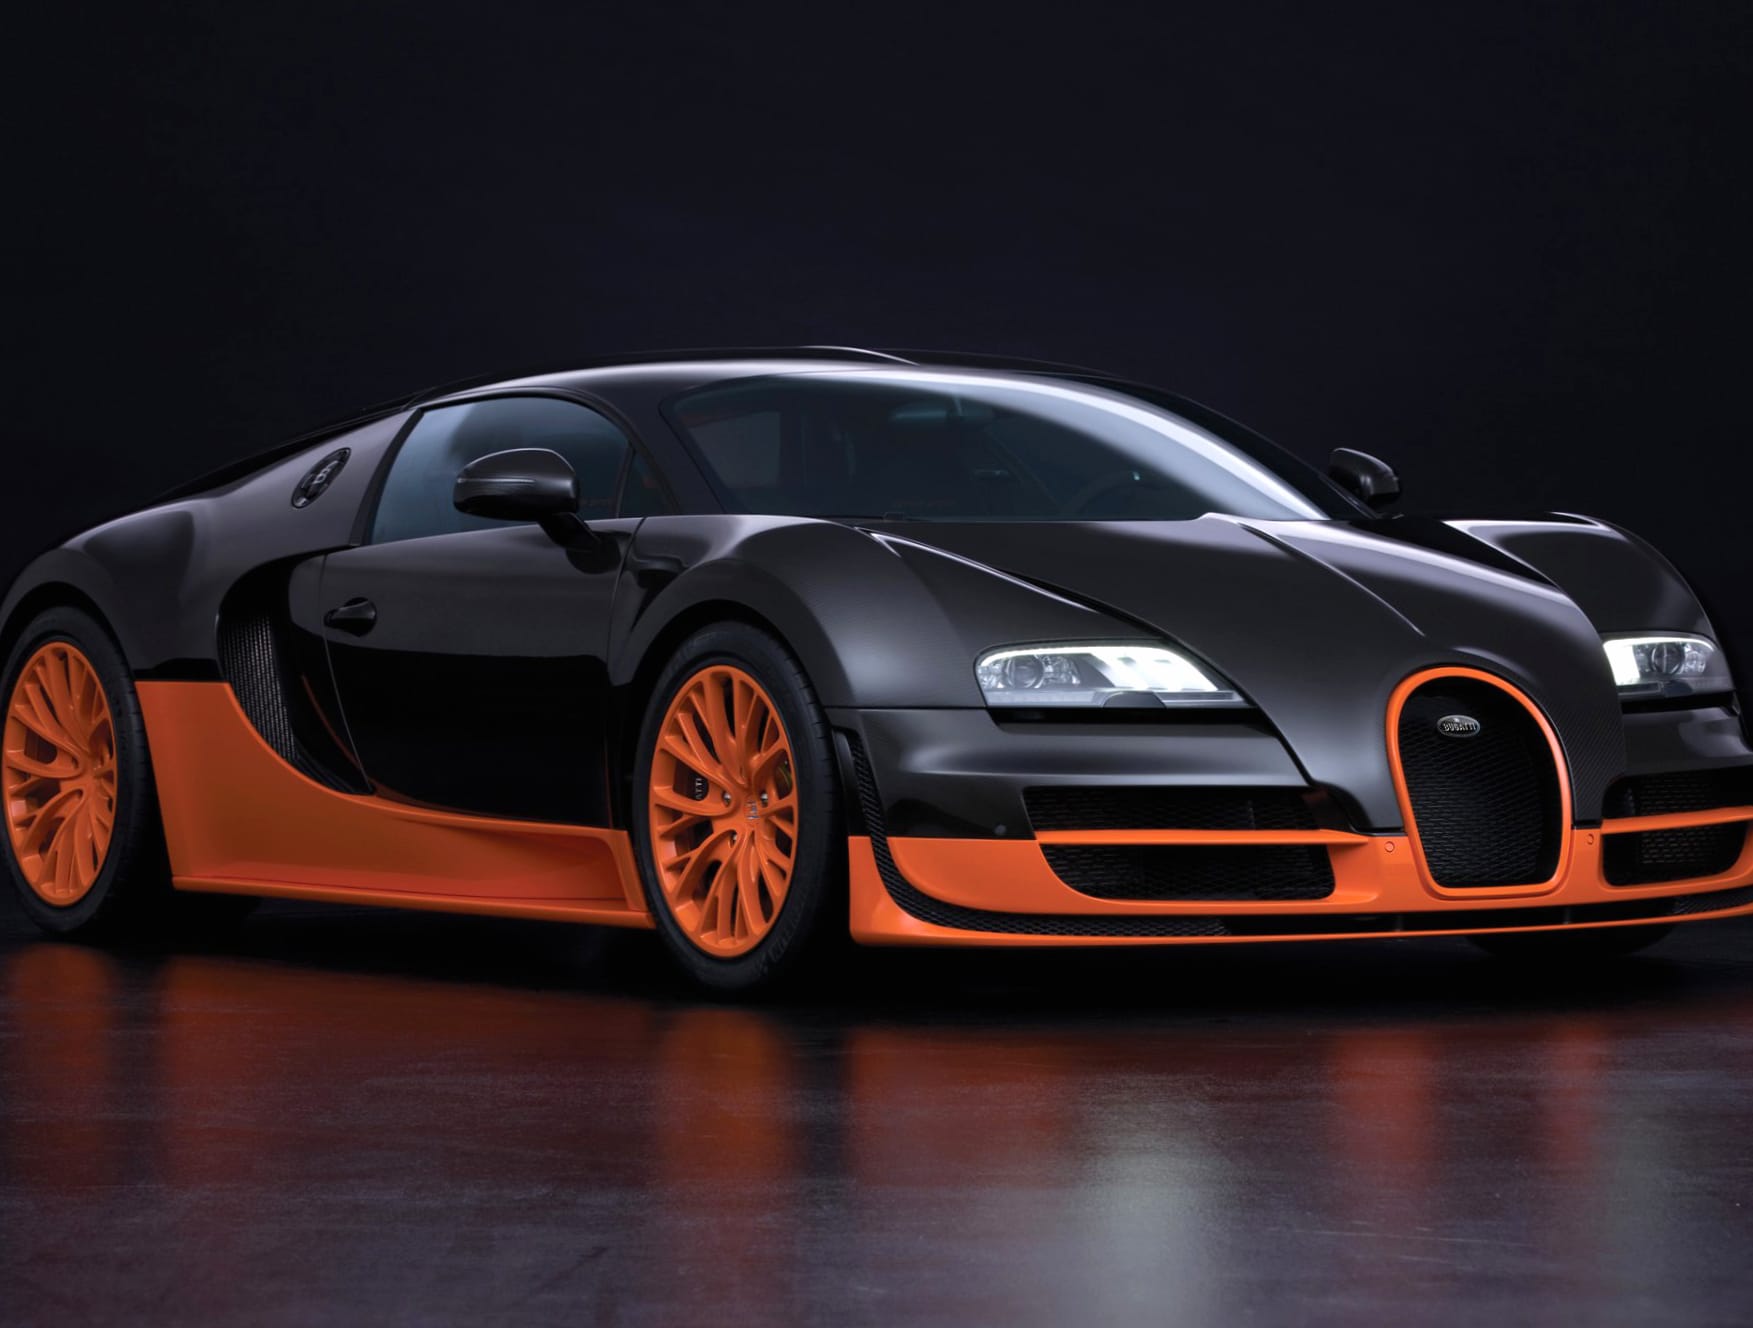 Bugatti Veyron 16-4 Super Sport at 2048 x 2048 iPad size wallpapers HD quality